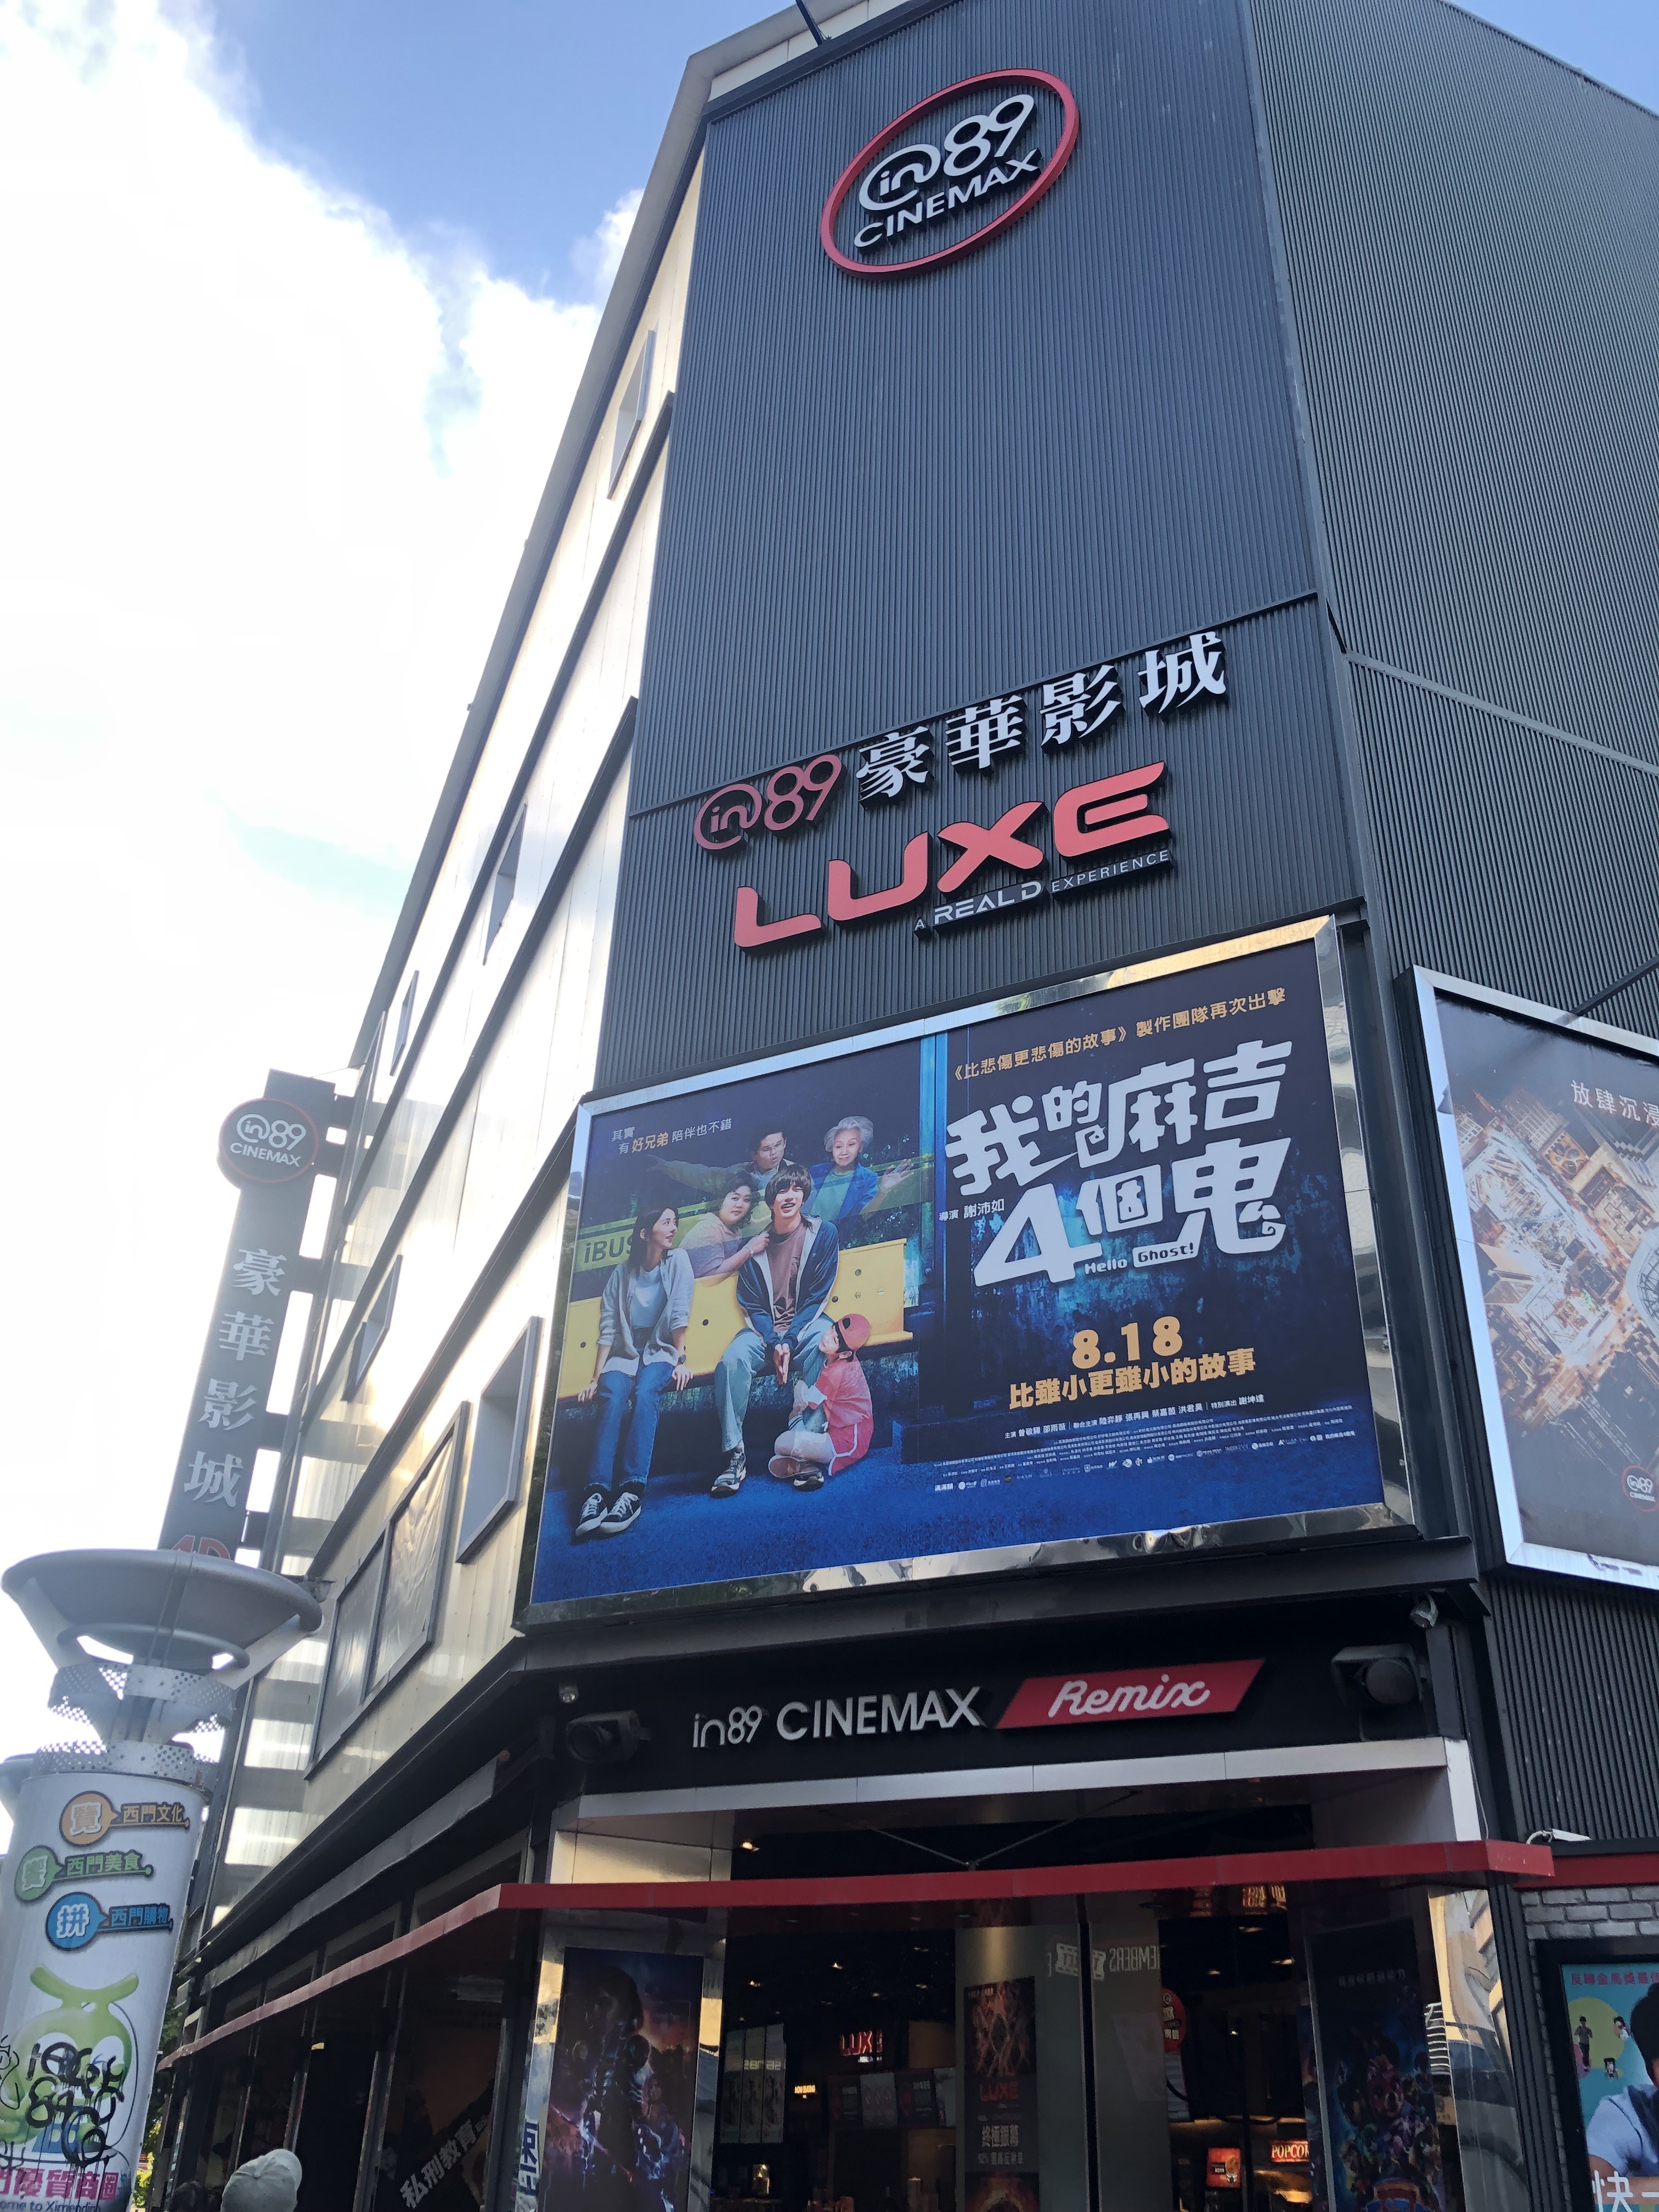 LUX CINEMAは電影街と呼ばれる場所にある大きな映画館。